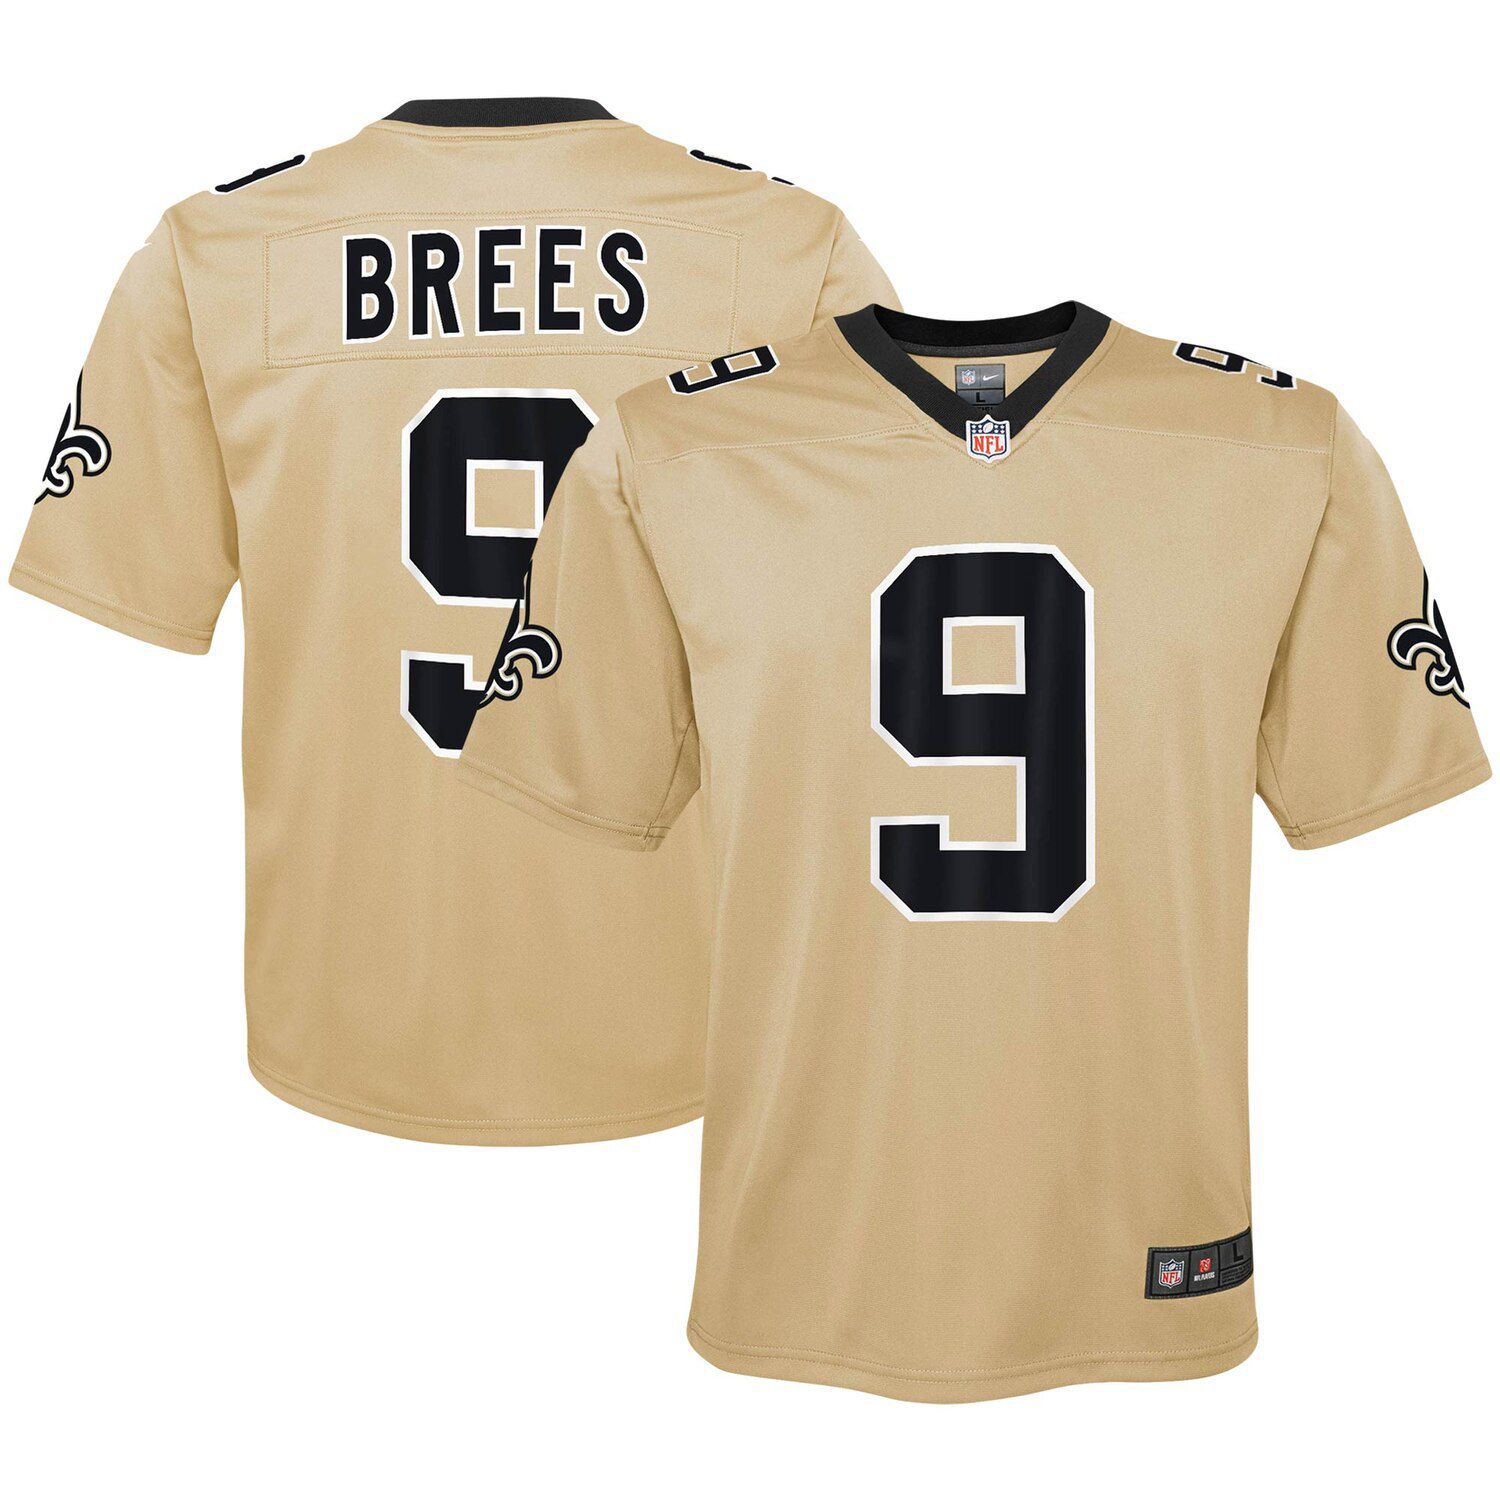 Drew Brees Gold New Orleans Saints 